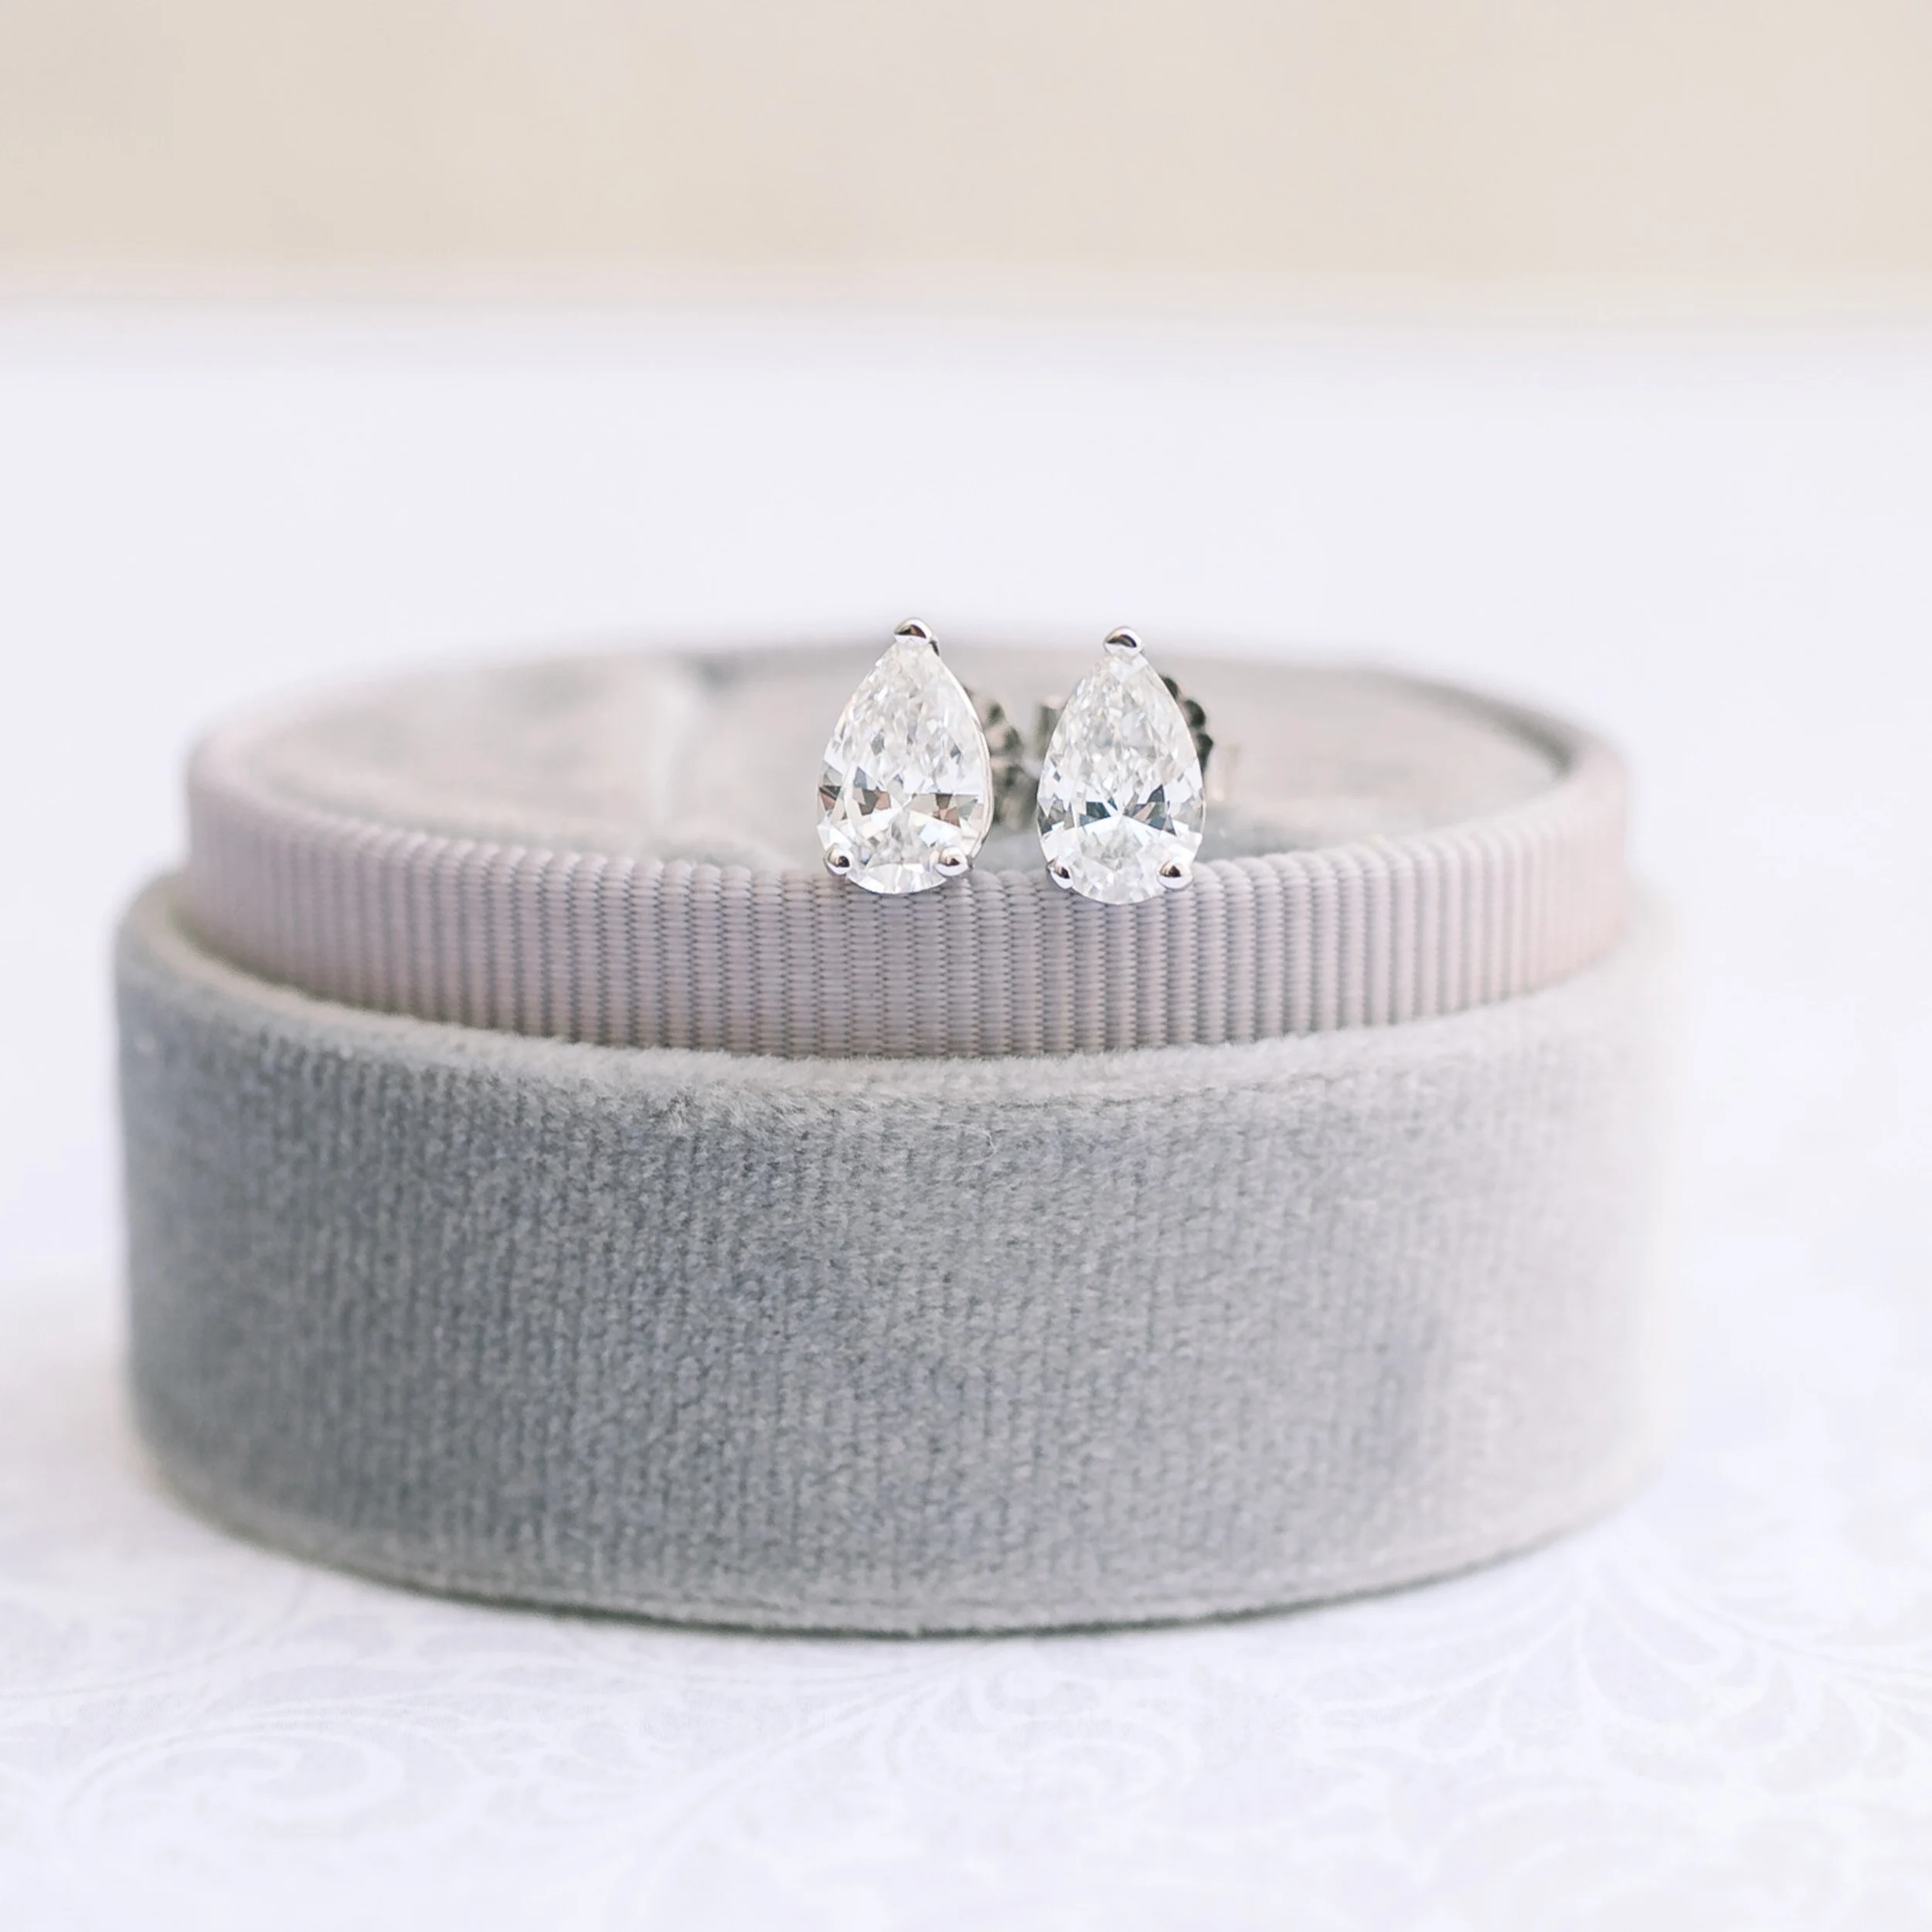 Hand Selected 1.4 ctw Synthetic Diamonds Pear Cut Diamond Stud Earrings in Platinum